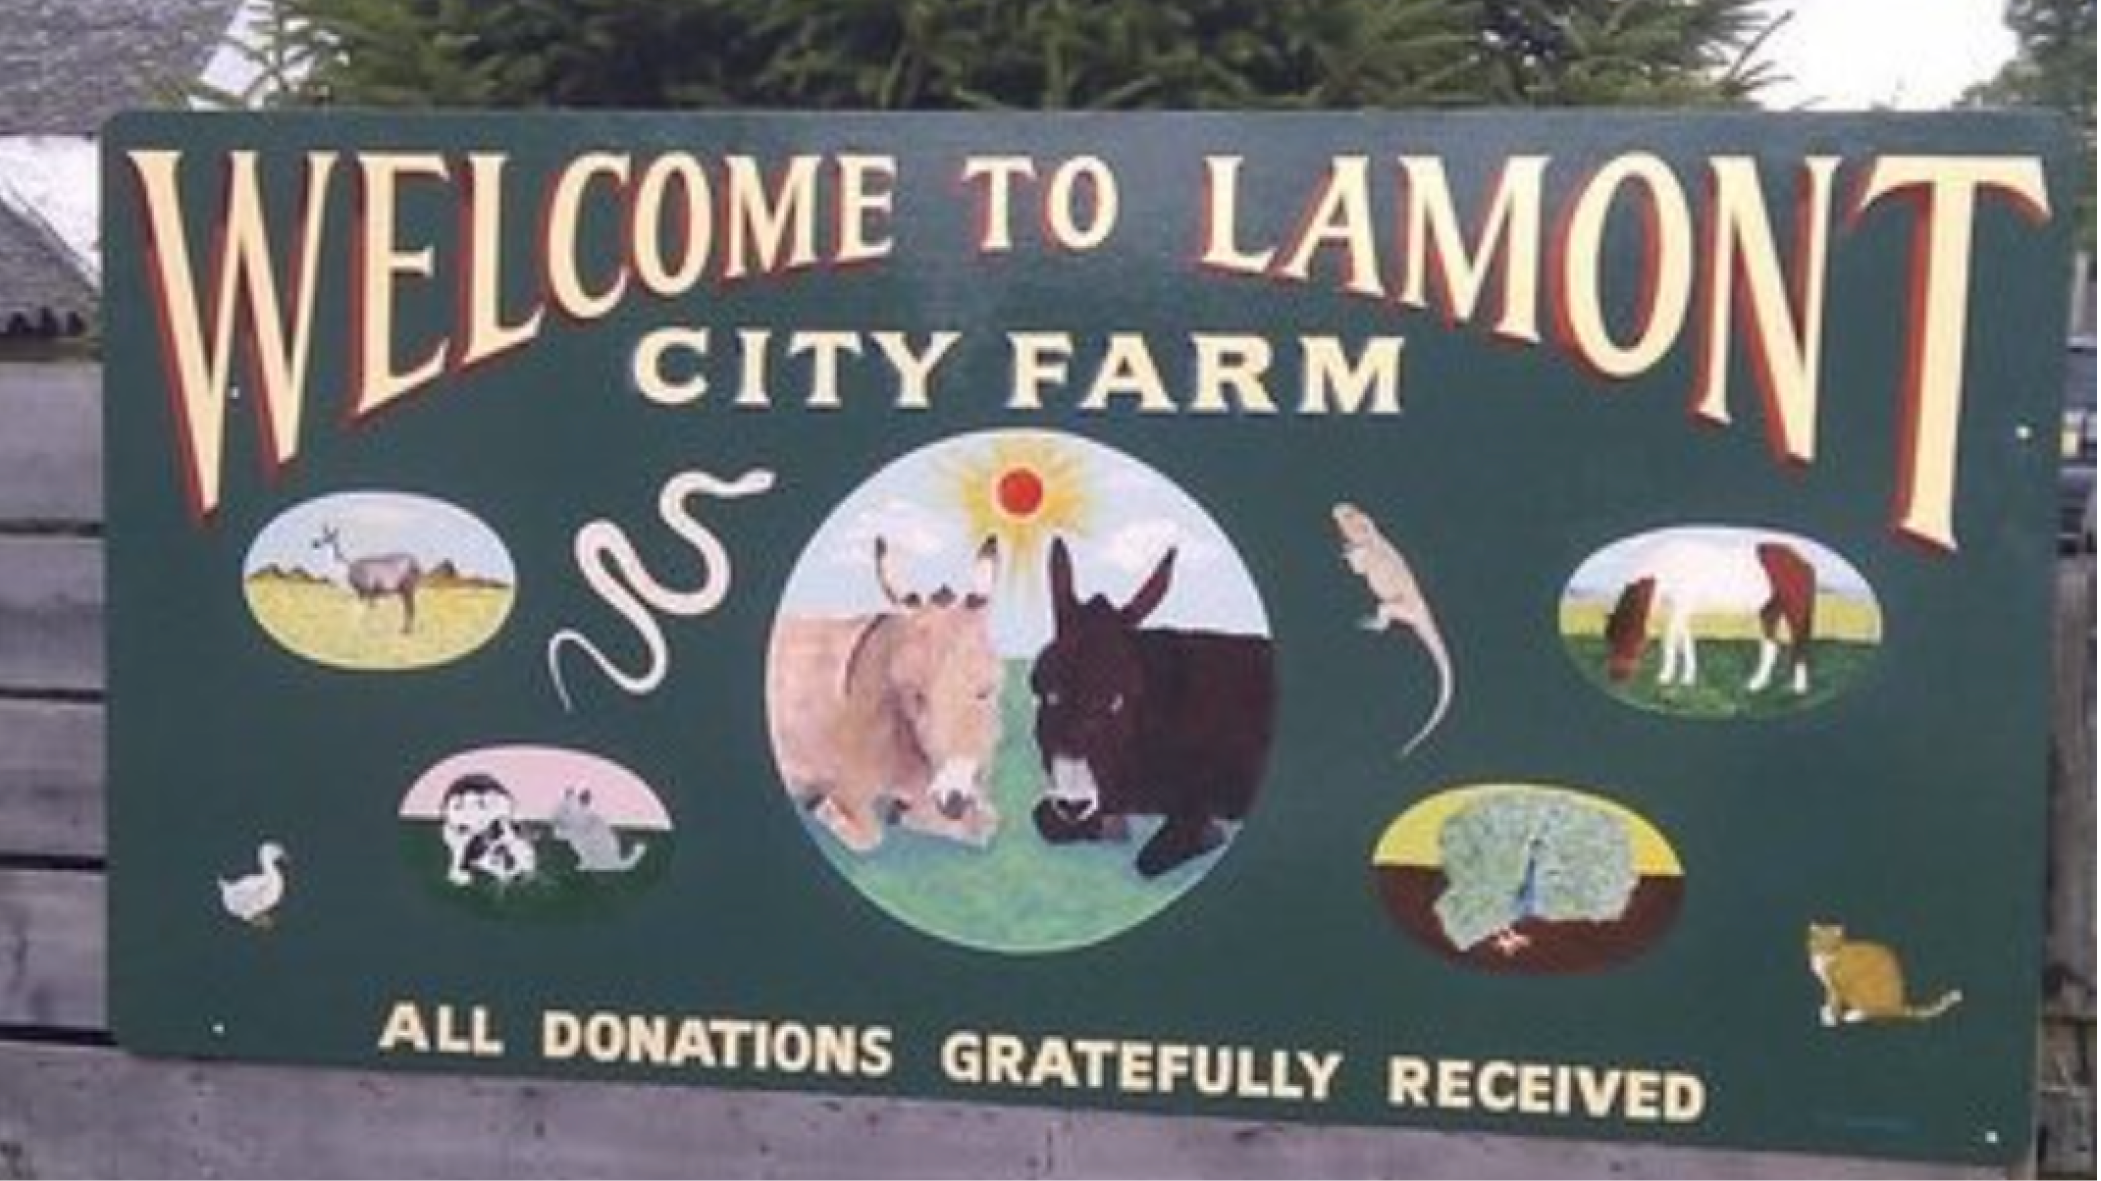 Lamont Farm Project: An animal welfare sanctuary